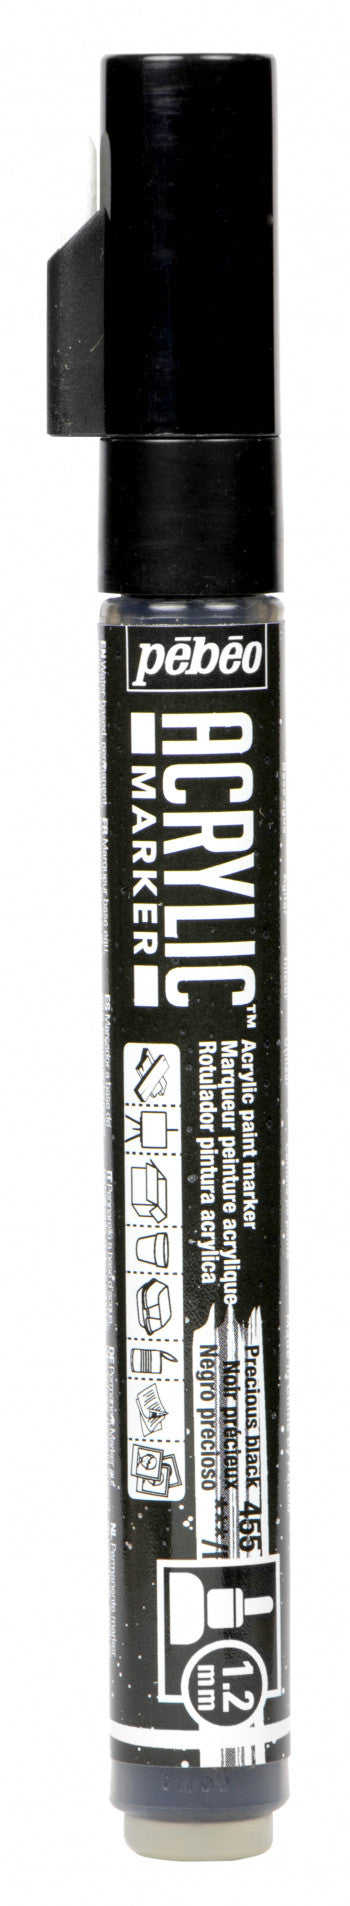 Acrylic Marker 1.2mm Pebeo Precious black - 455